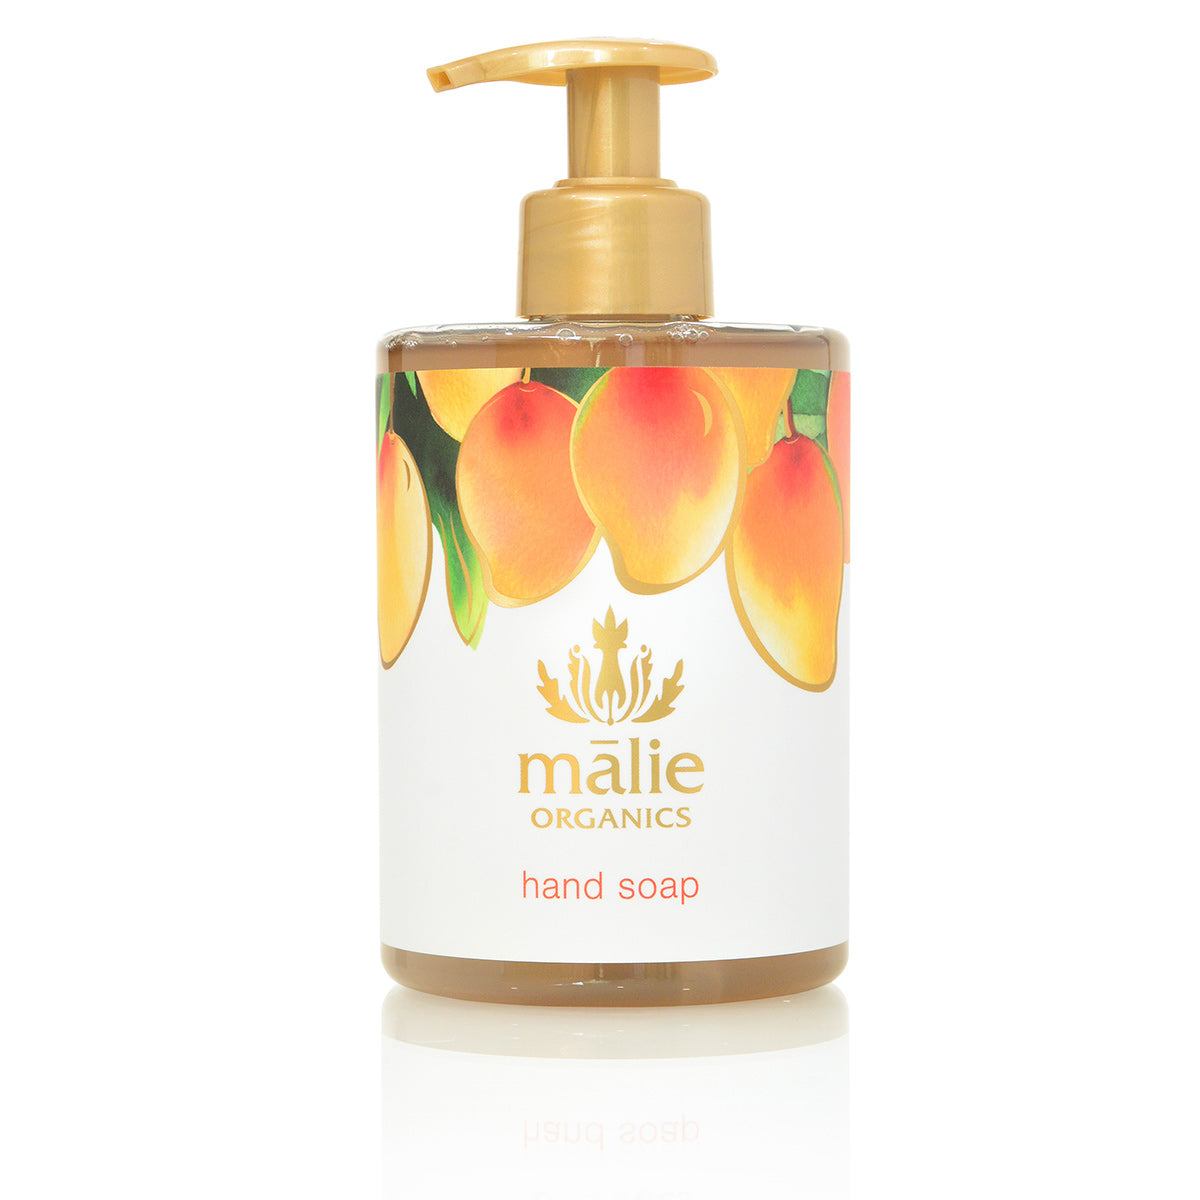 mango nectar hand soap - Home